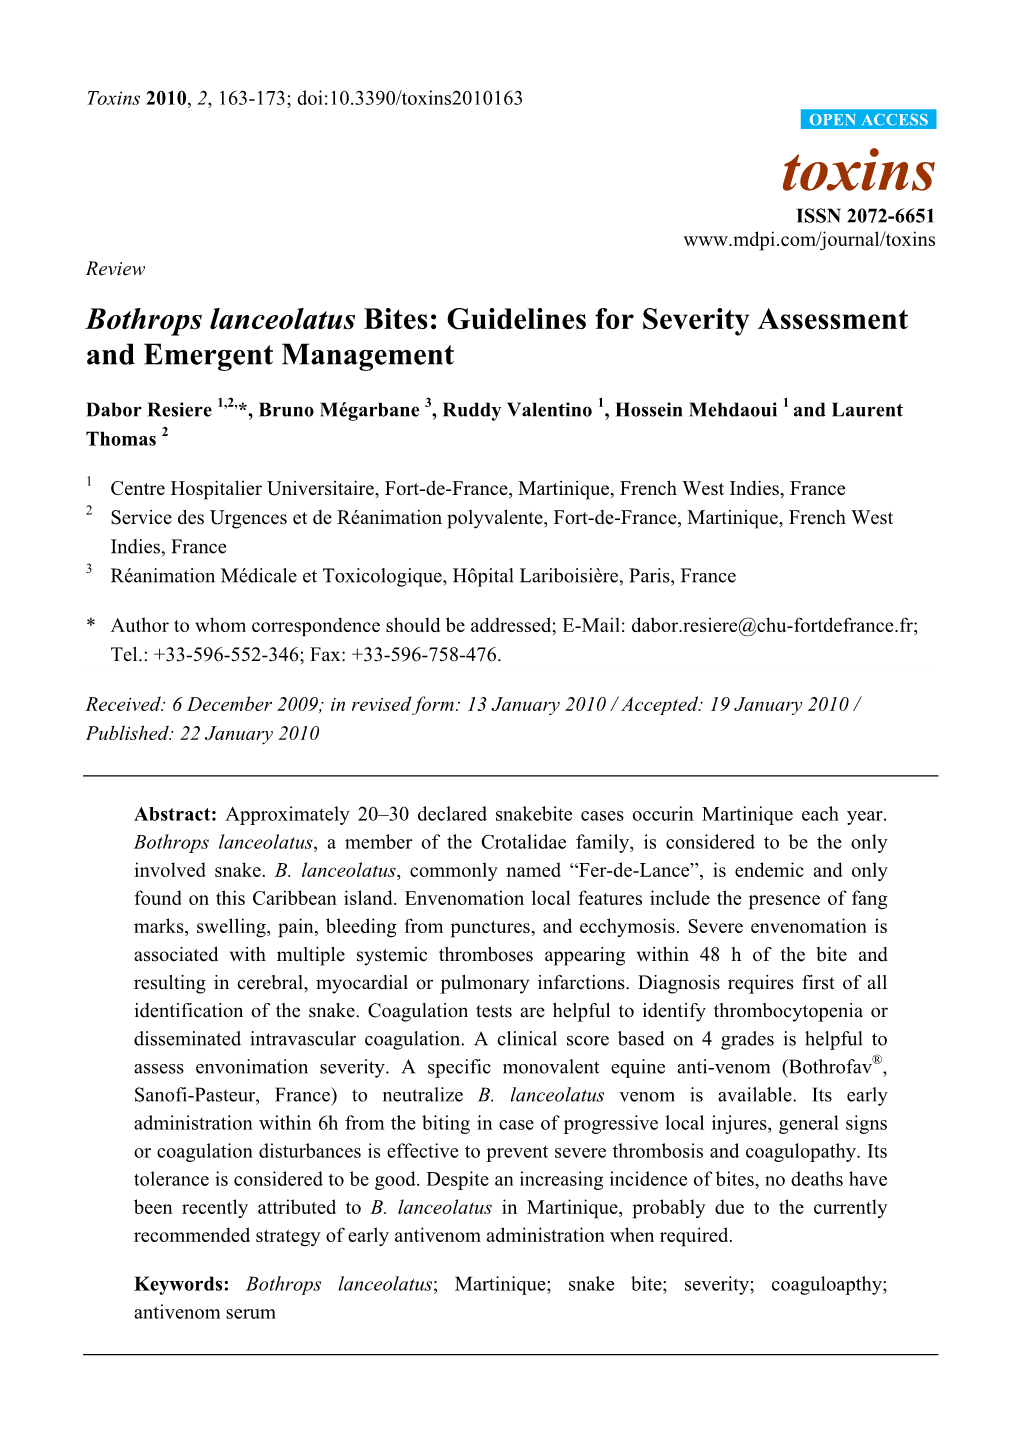 Bothrops Lanceolatus Bites: Guidelines for Severity Assessment and Emergent Management